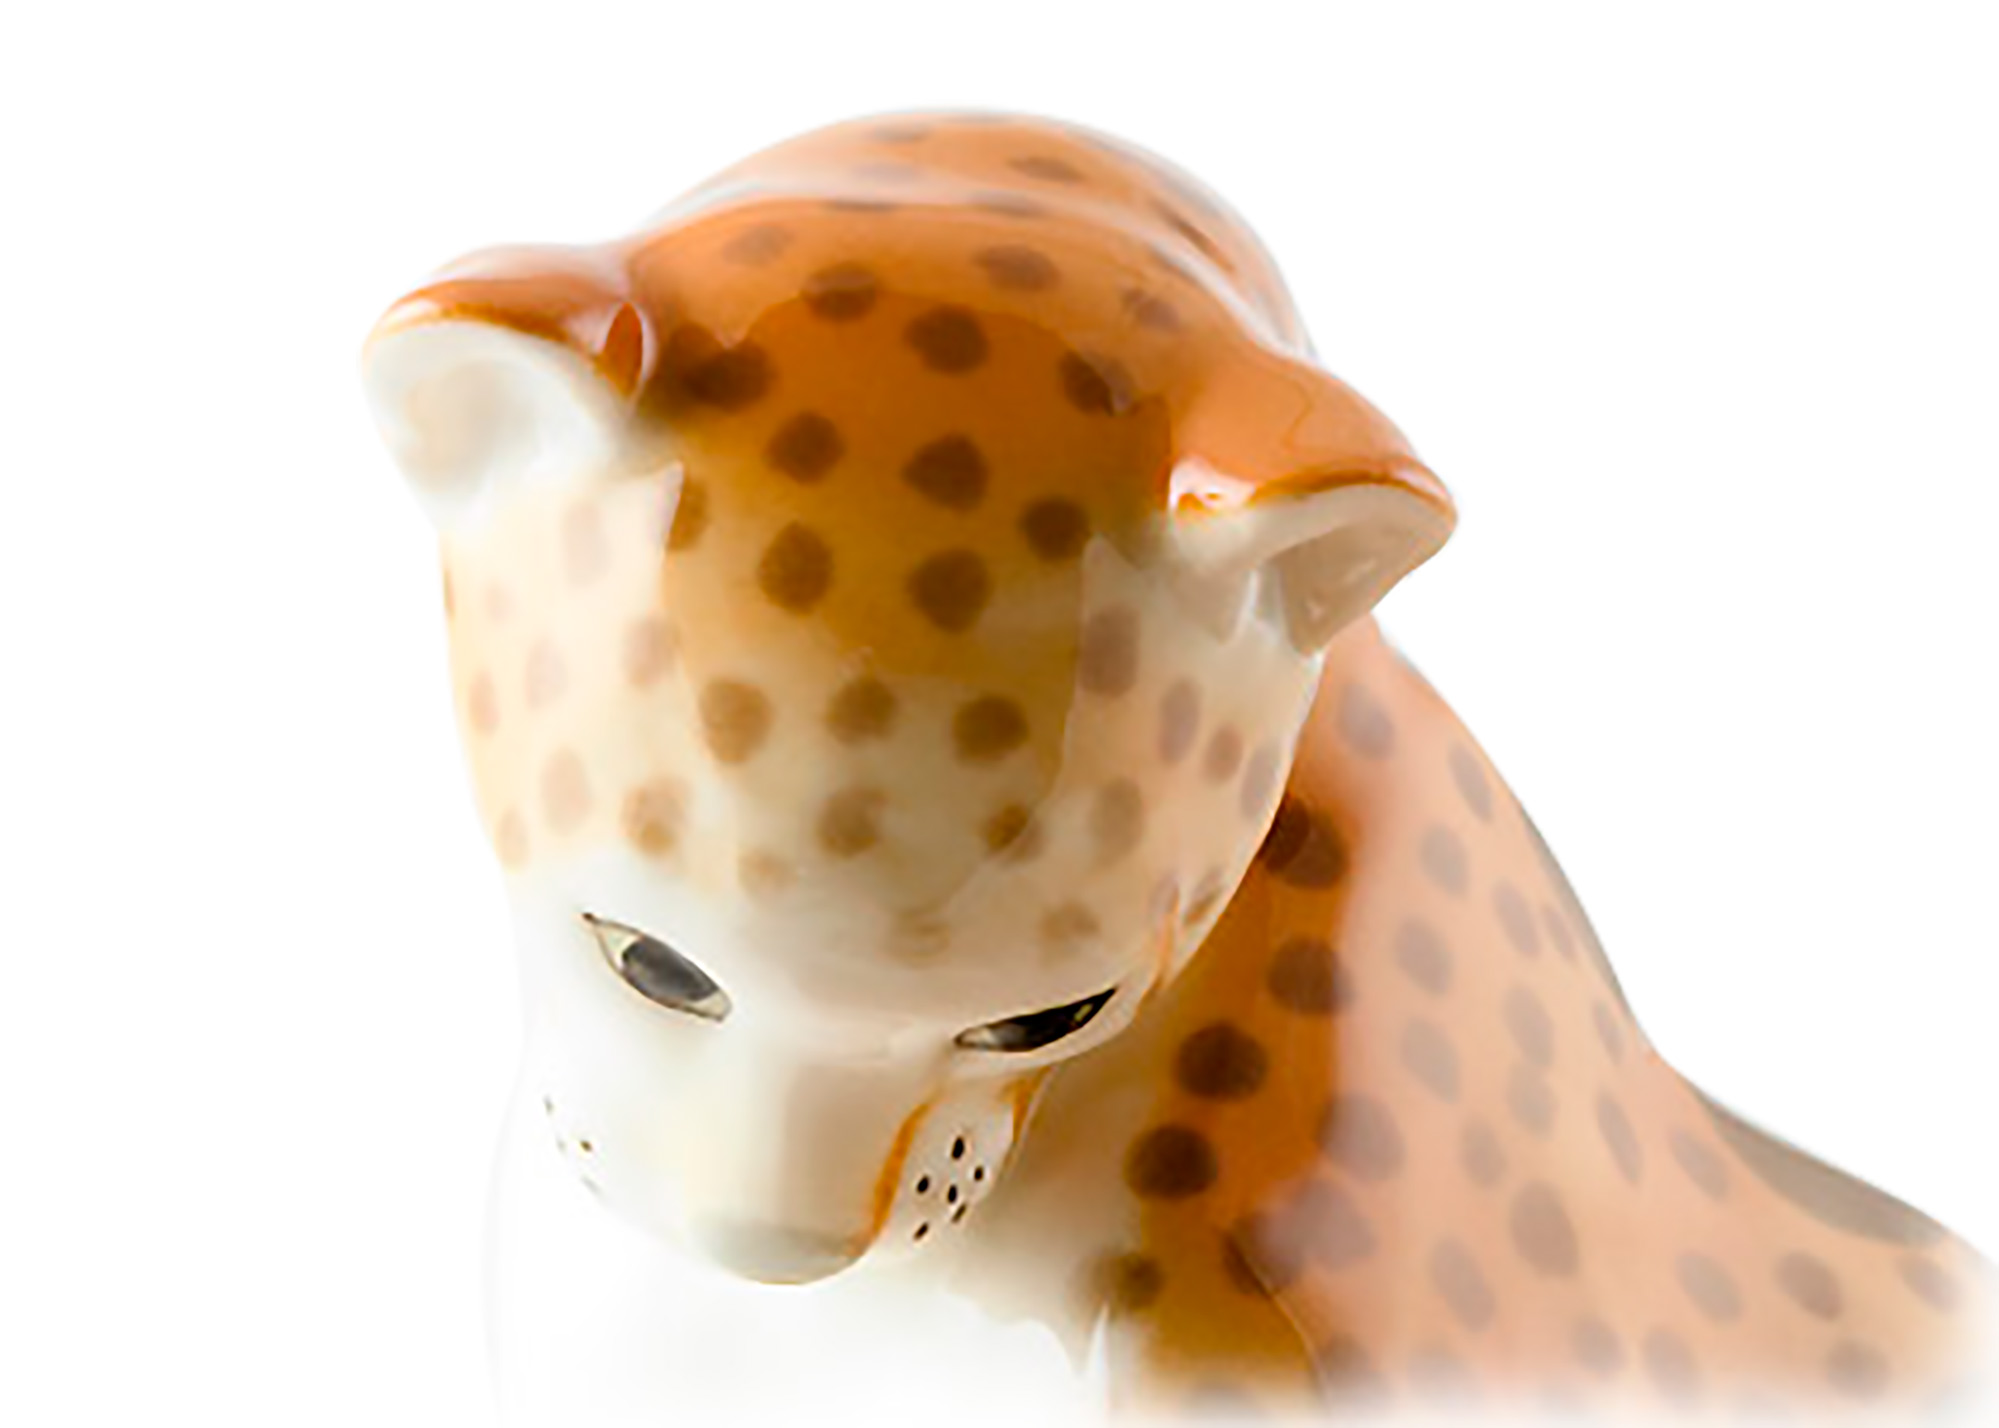 Buy Фарфоровая статуэтка "Леопард" at GoldenCockerel.com